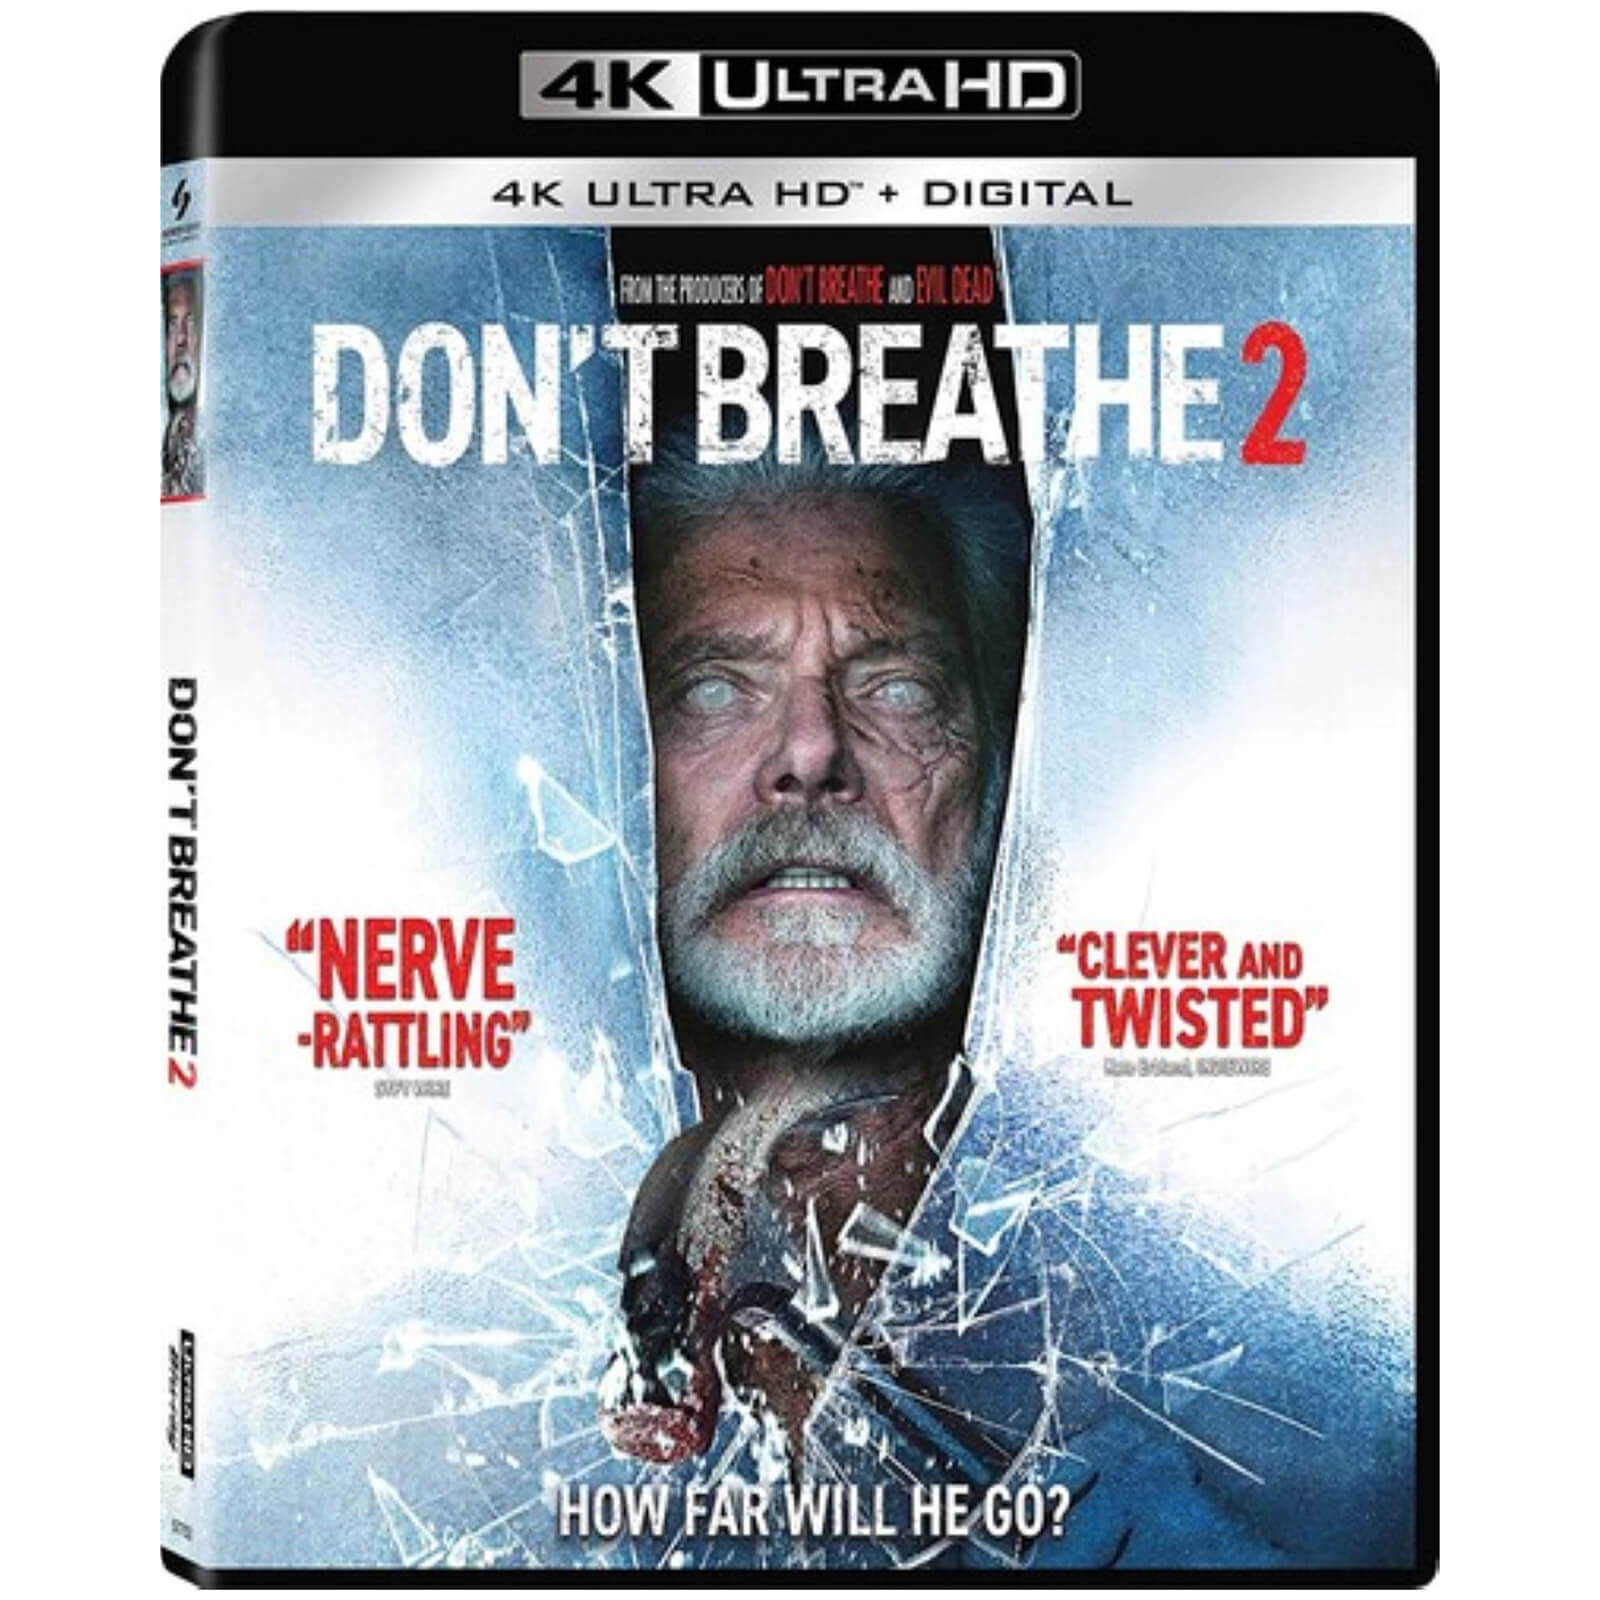 Don't Breathe 2 - 4K Ultra HD (US Import)